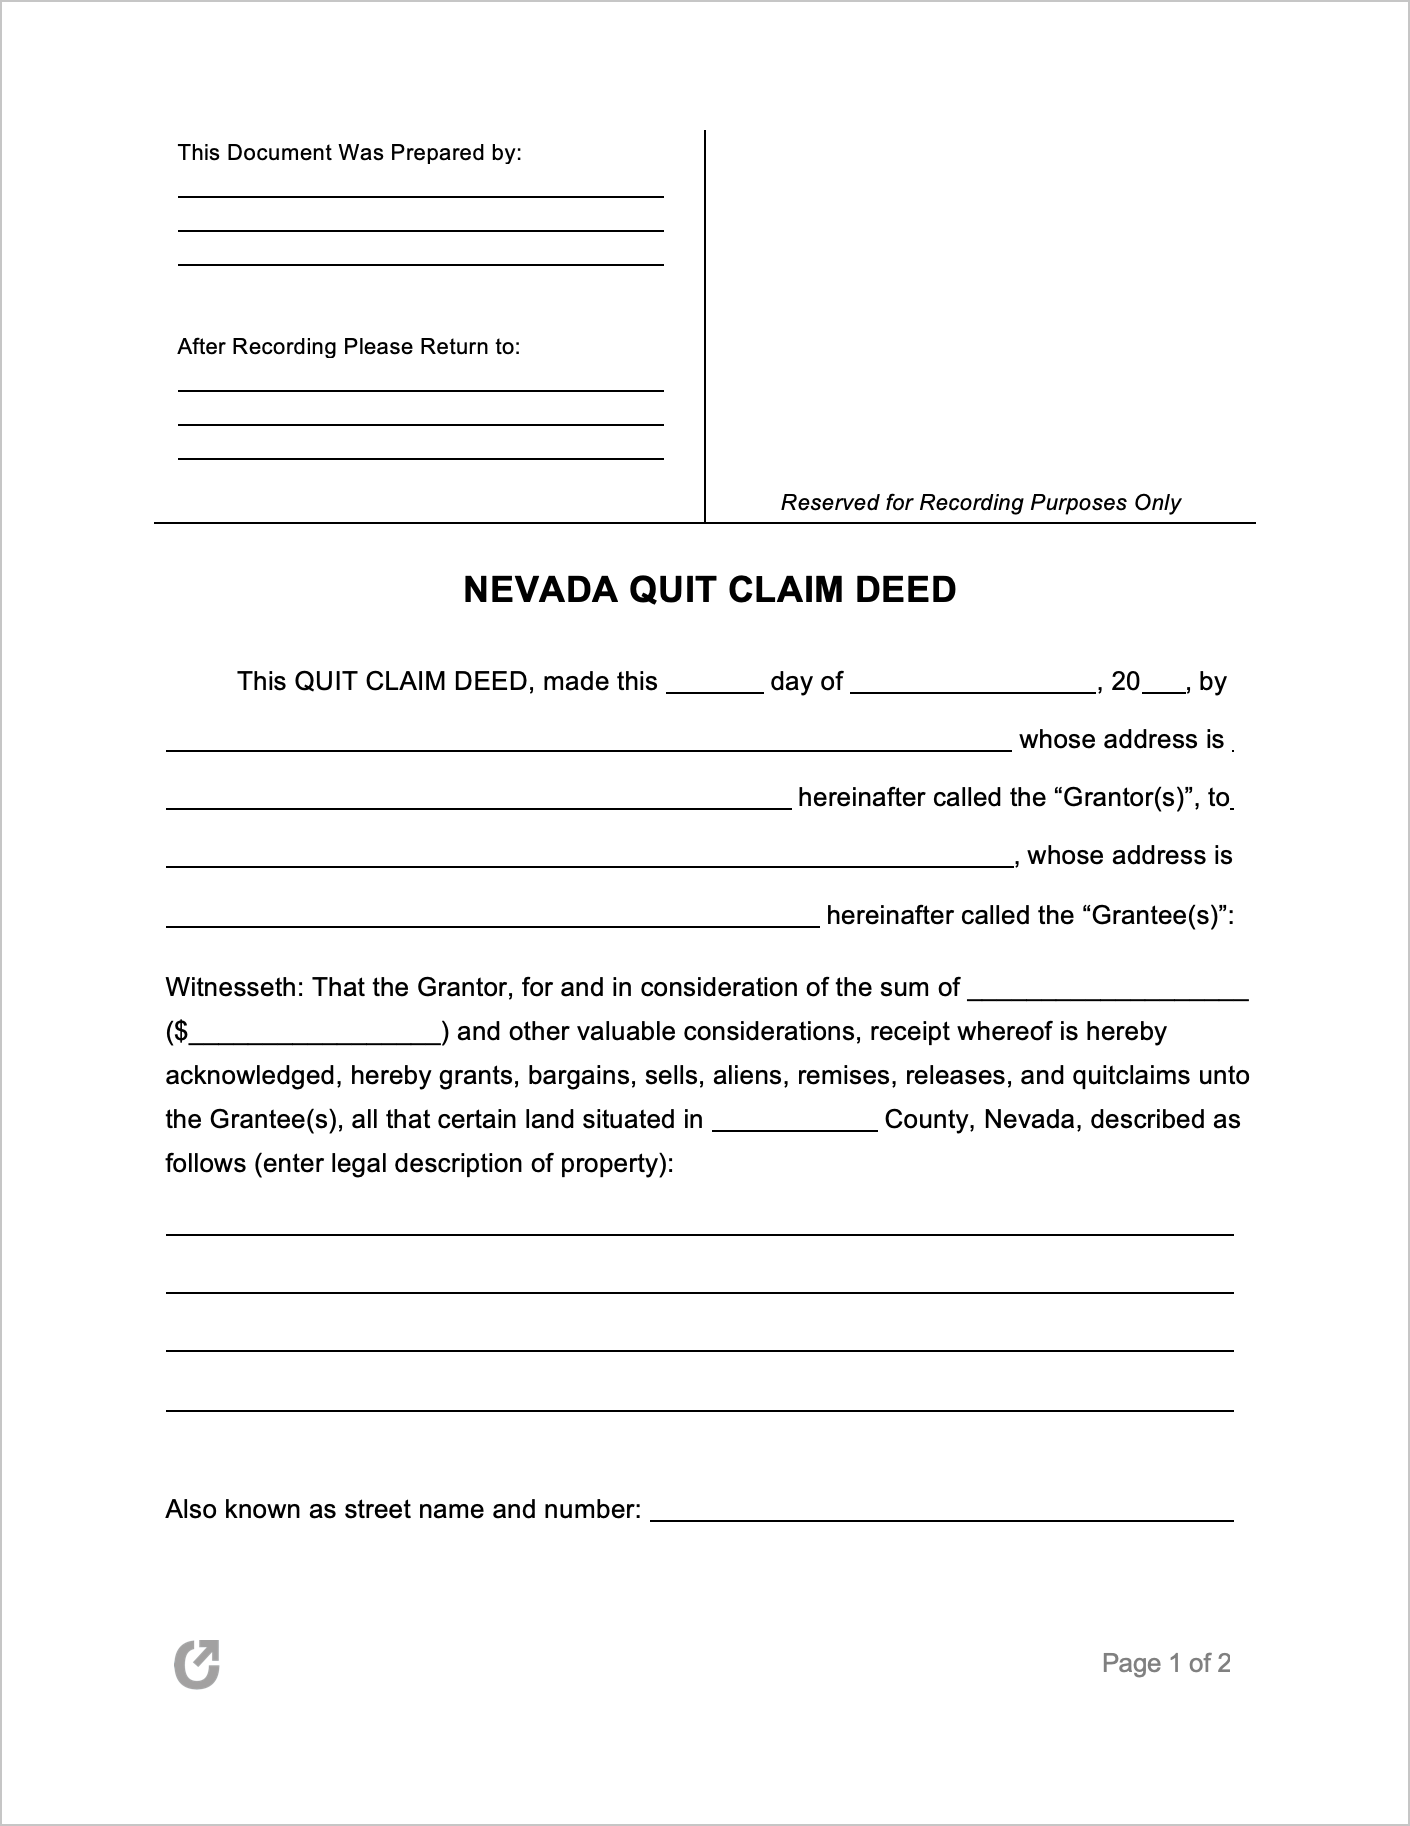 free-nevada-quit-claim-deed-form-pdf-word